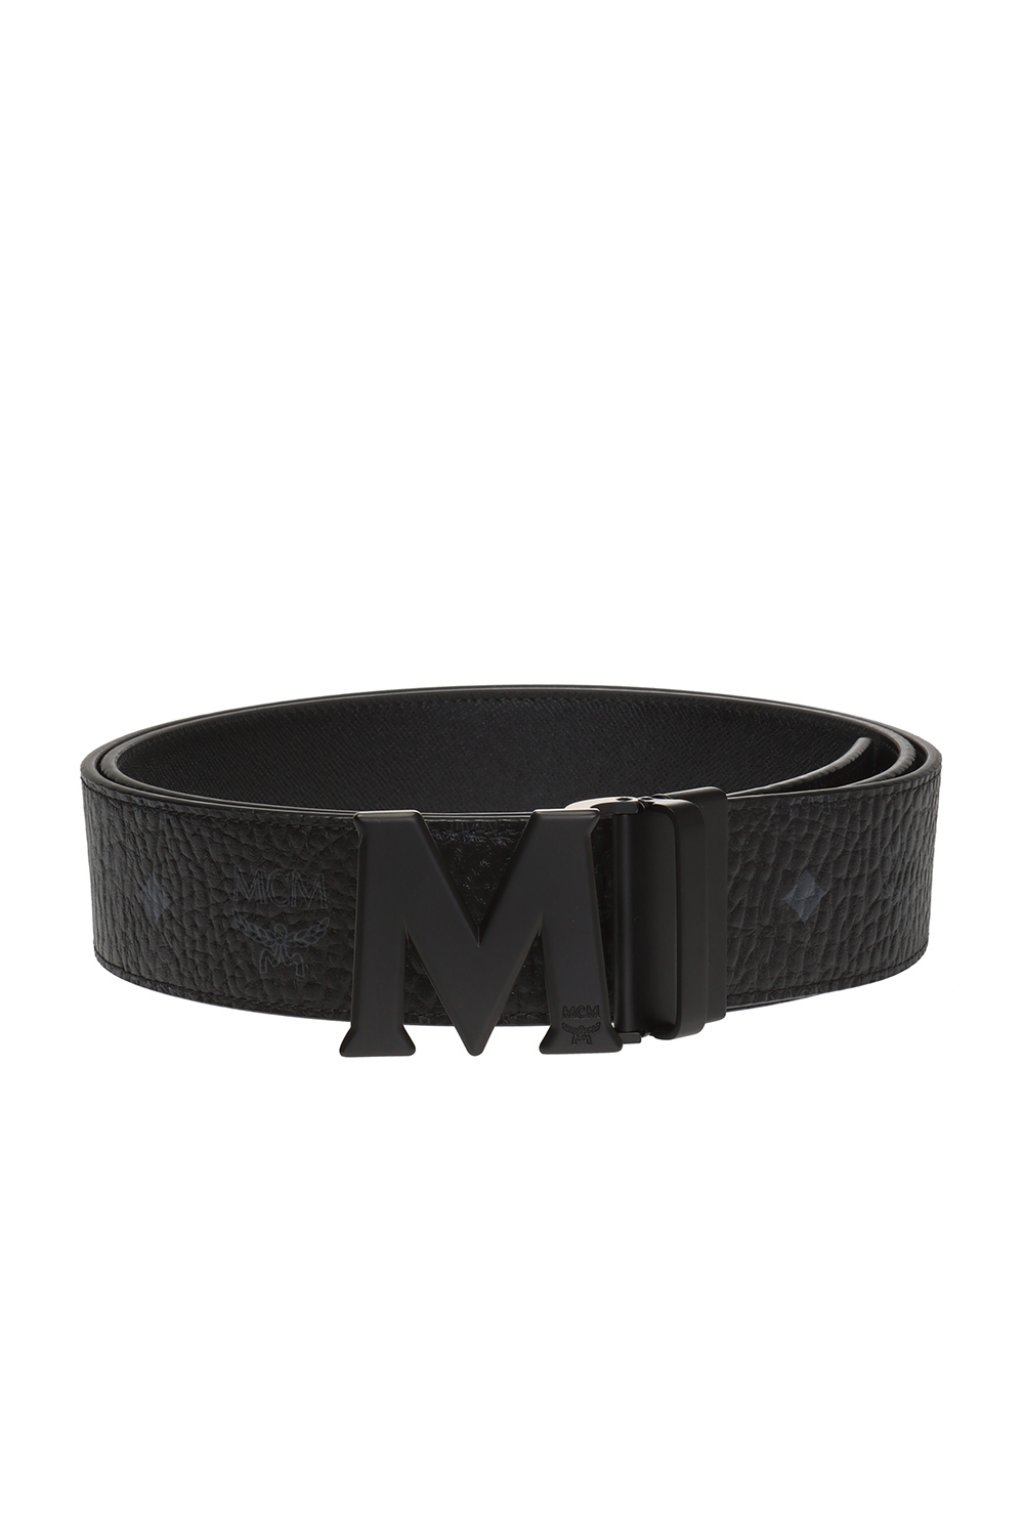 Mcm Belt with Logo Men's Black | Vitkac